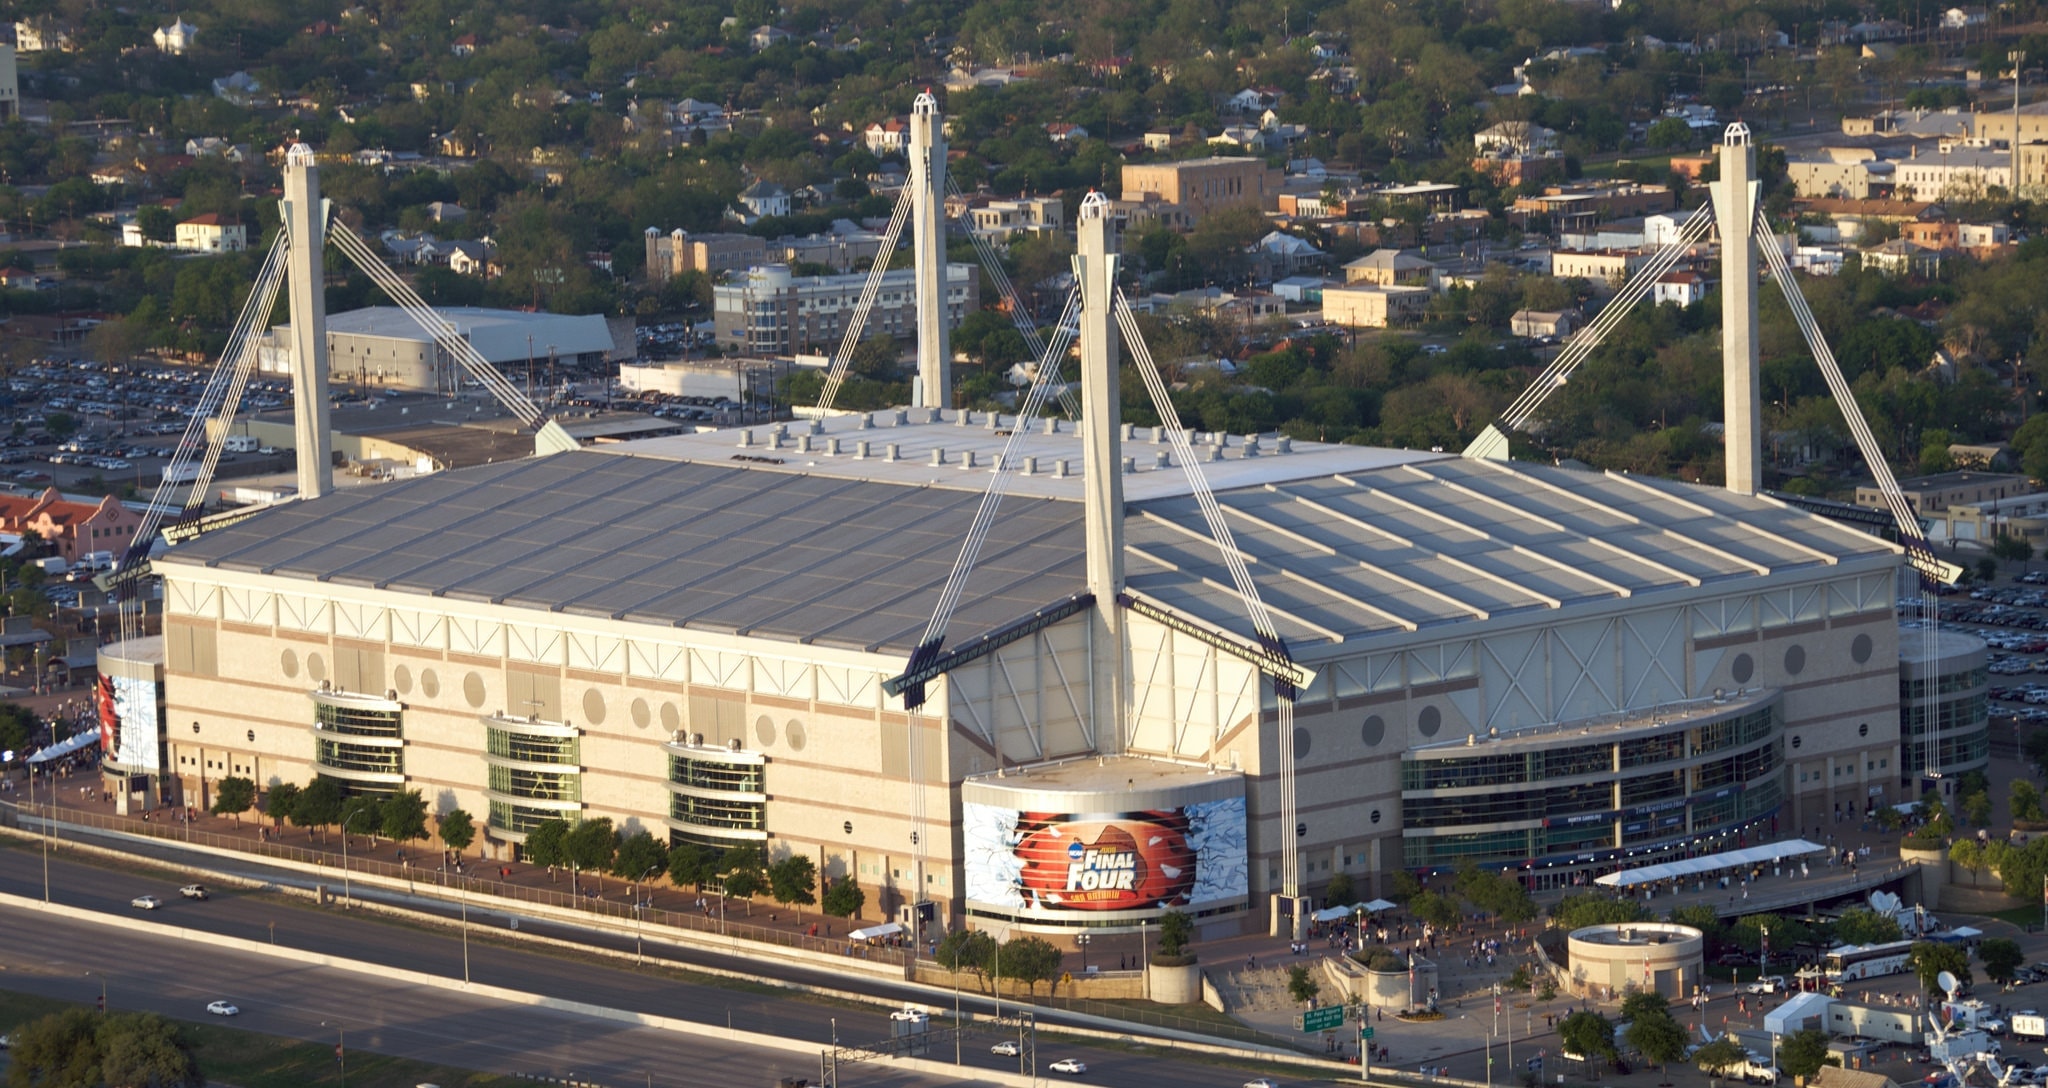 The Alamodome, a 65,000-seat football stadium in San Antonio, Texas, will host the 2015 GC session. (Alamodome / ANN)